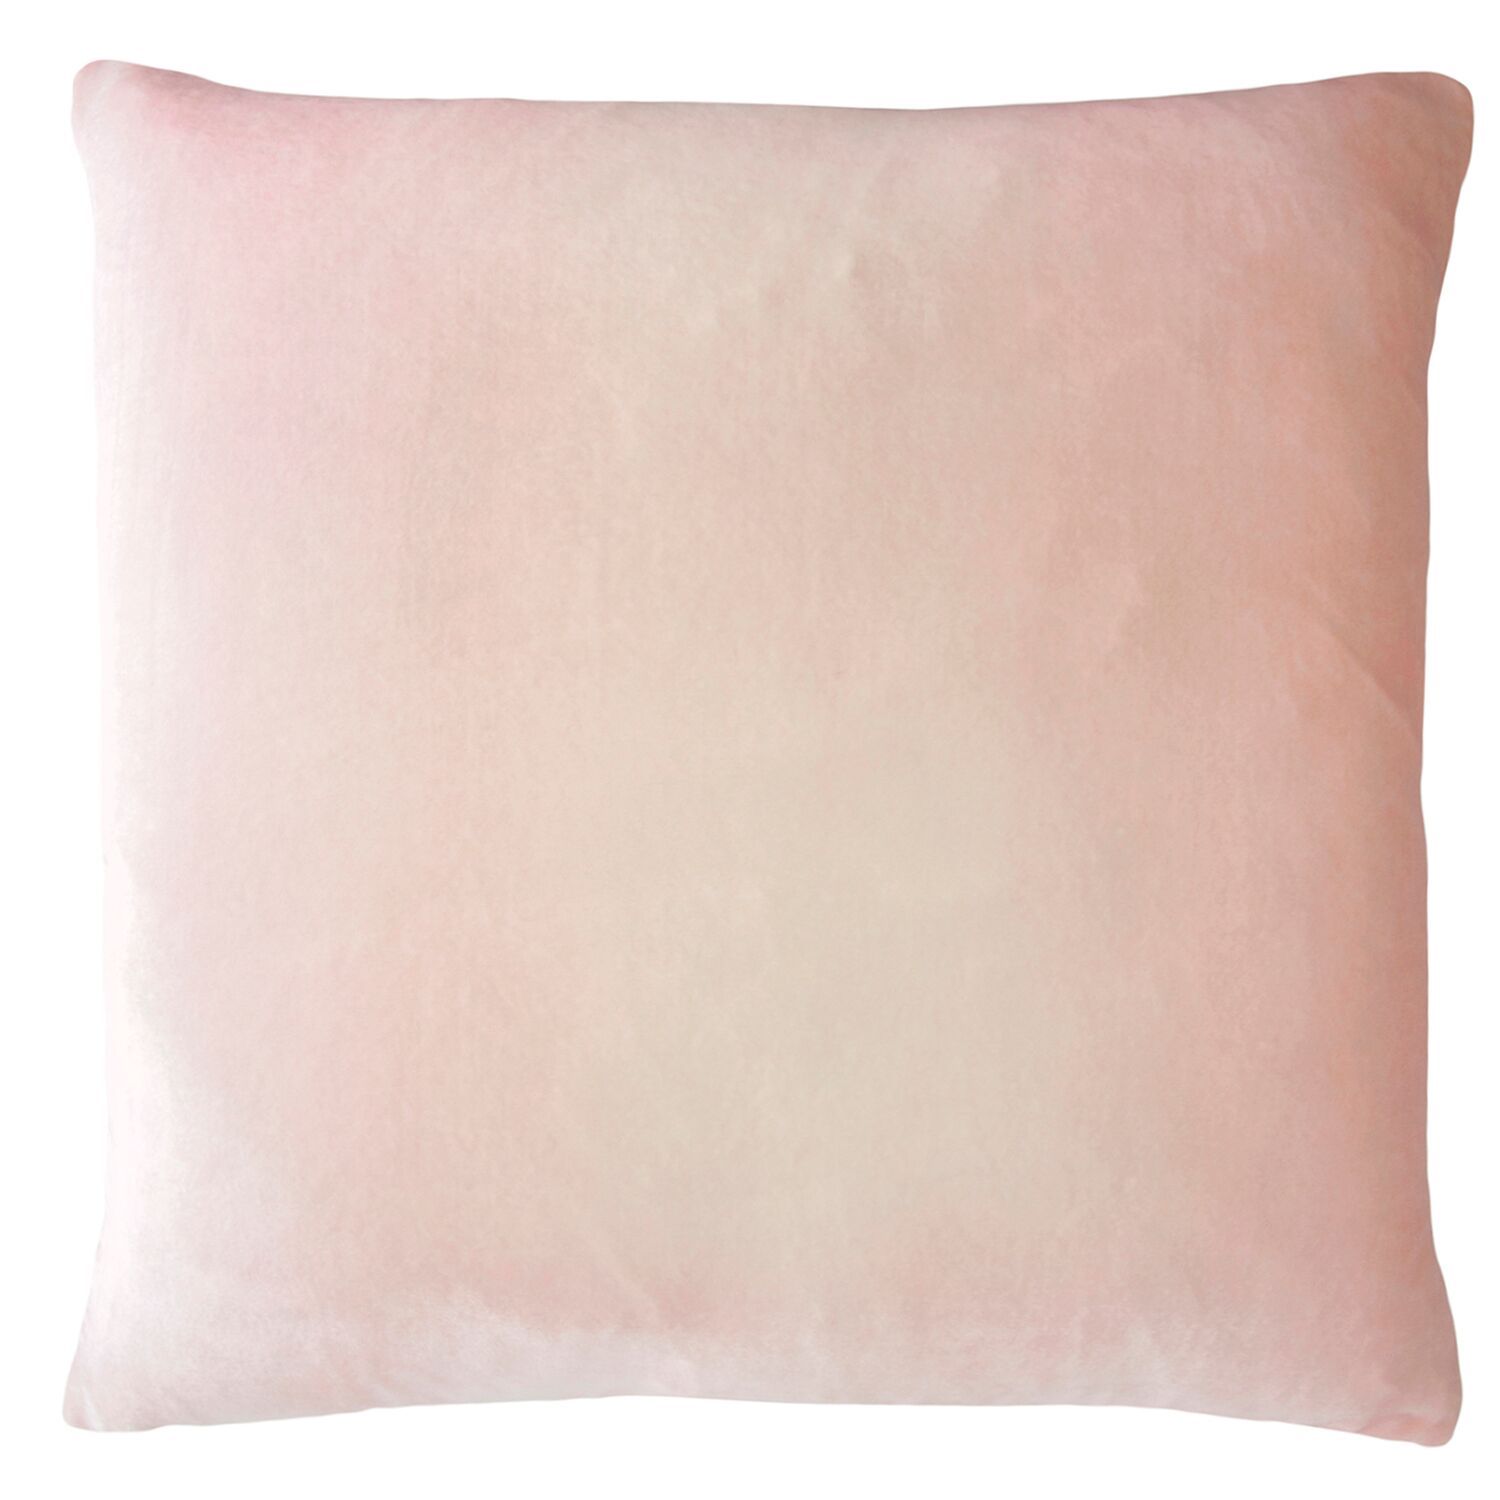 Blush Ombre Velvet Pillows by Kevin O'Brien Studio | Fig Linens